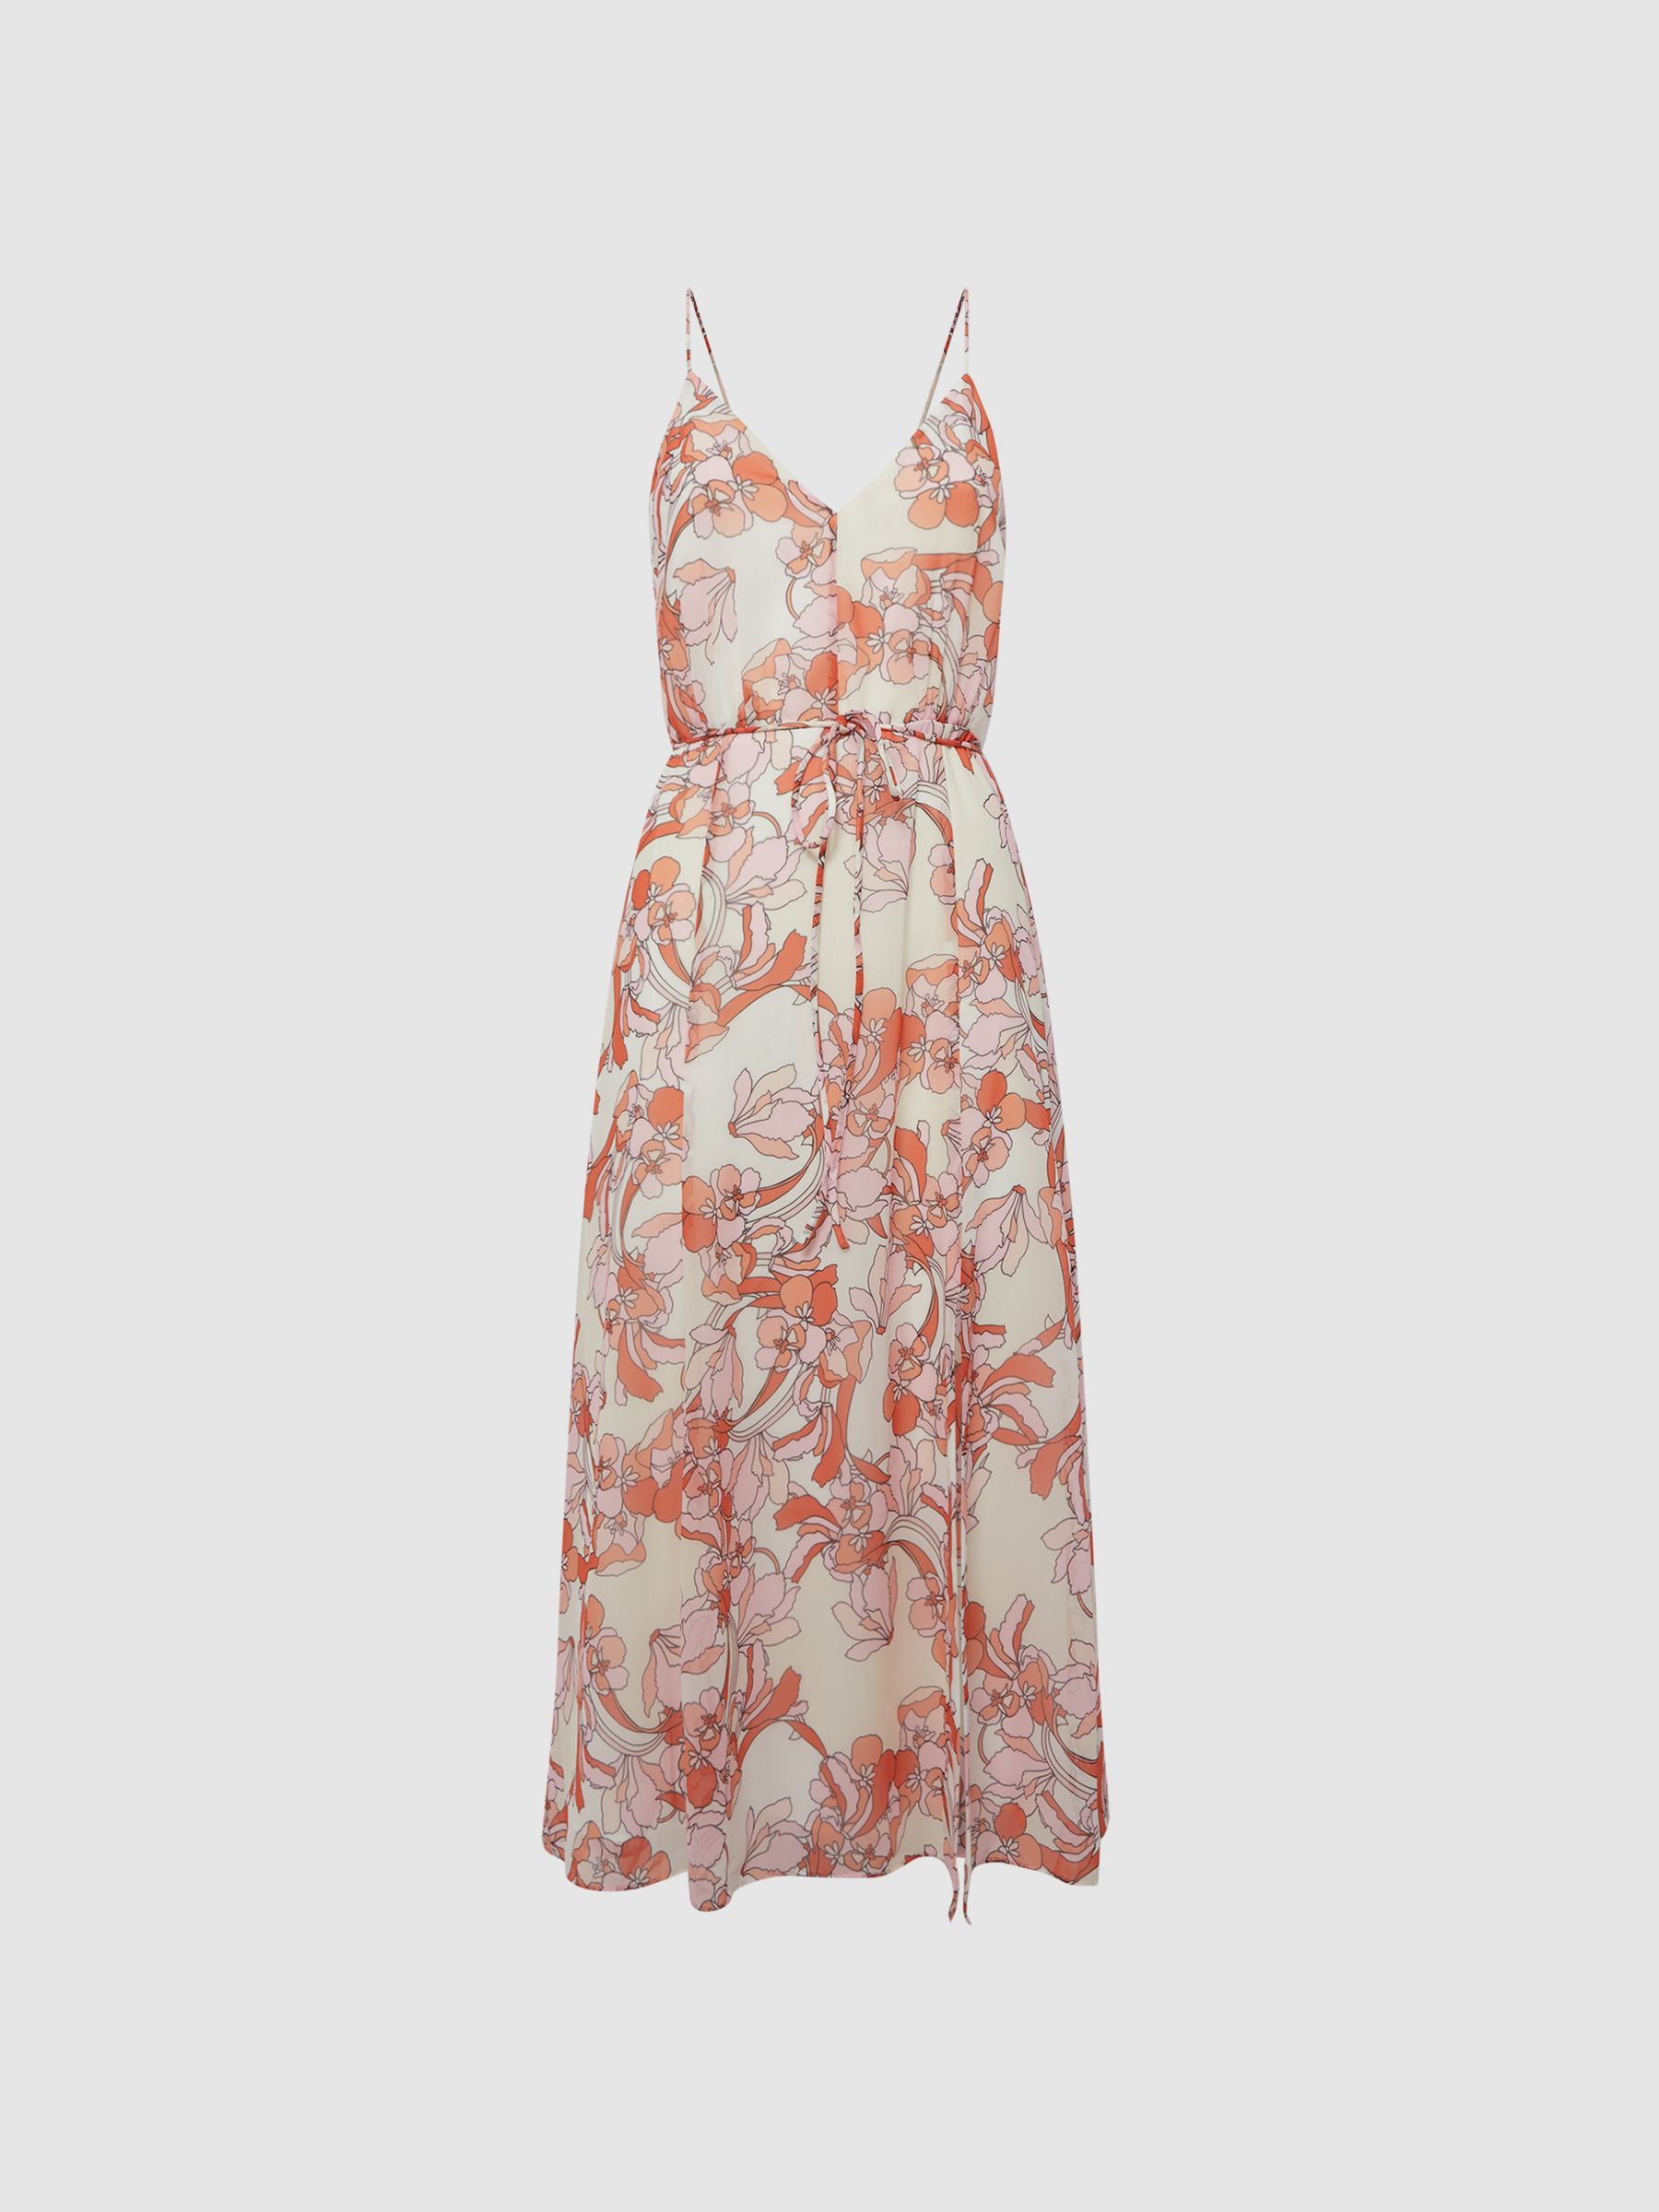 Reiss Pippa Floral Printed Midi Dress | REISS USA